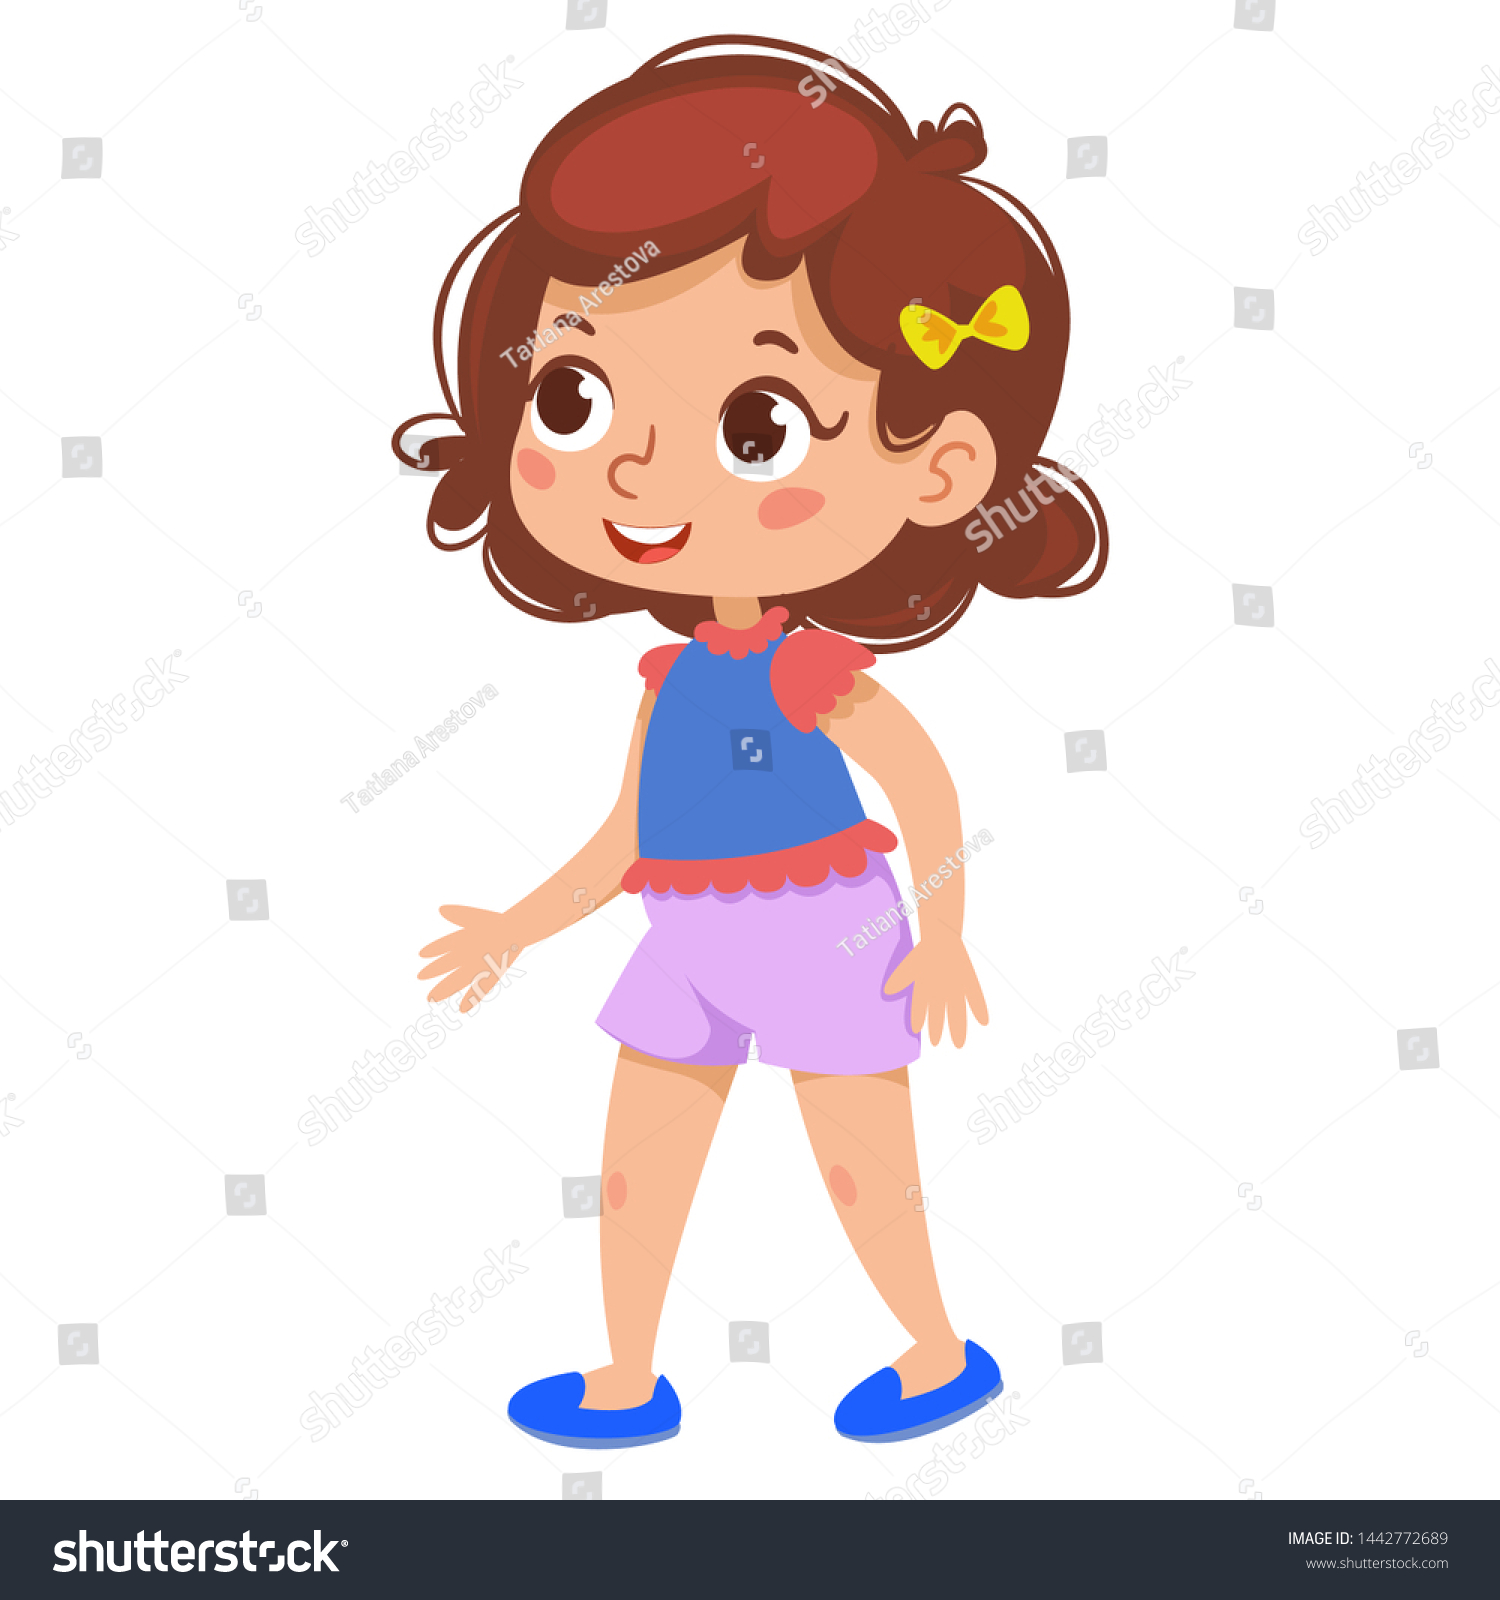 animated girl standing